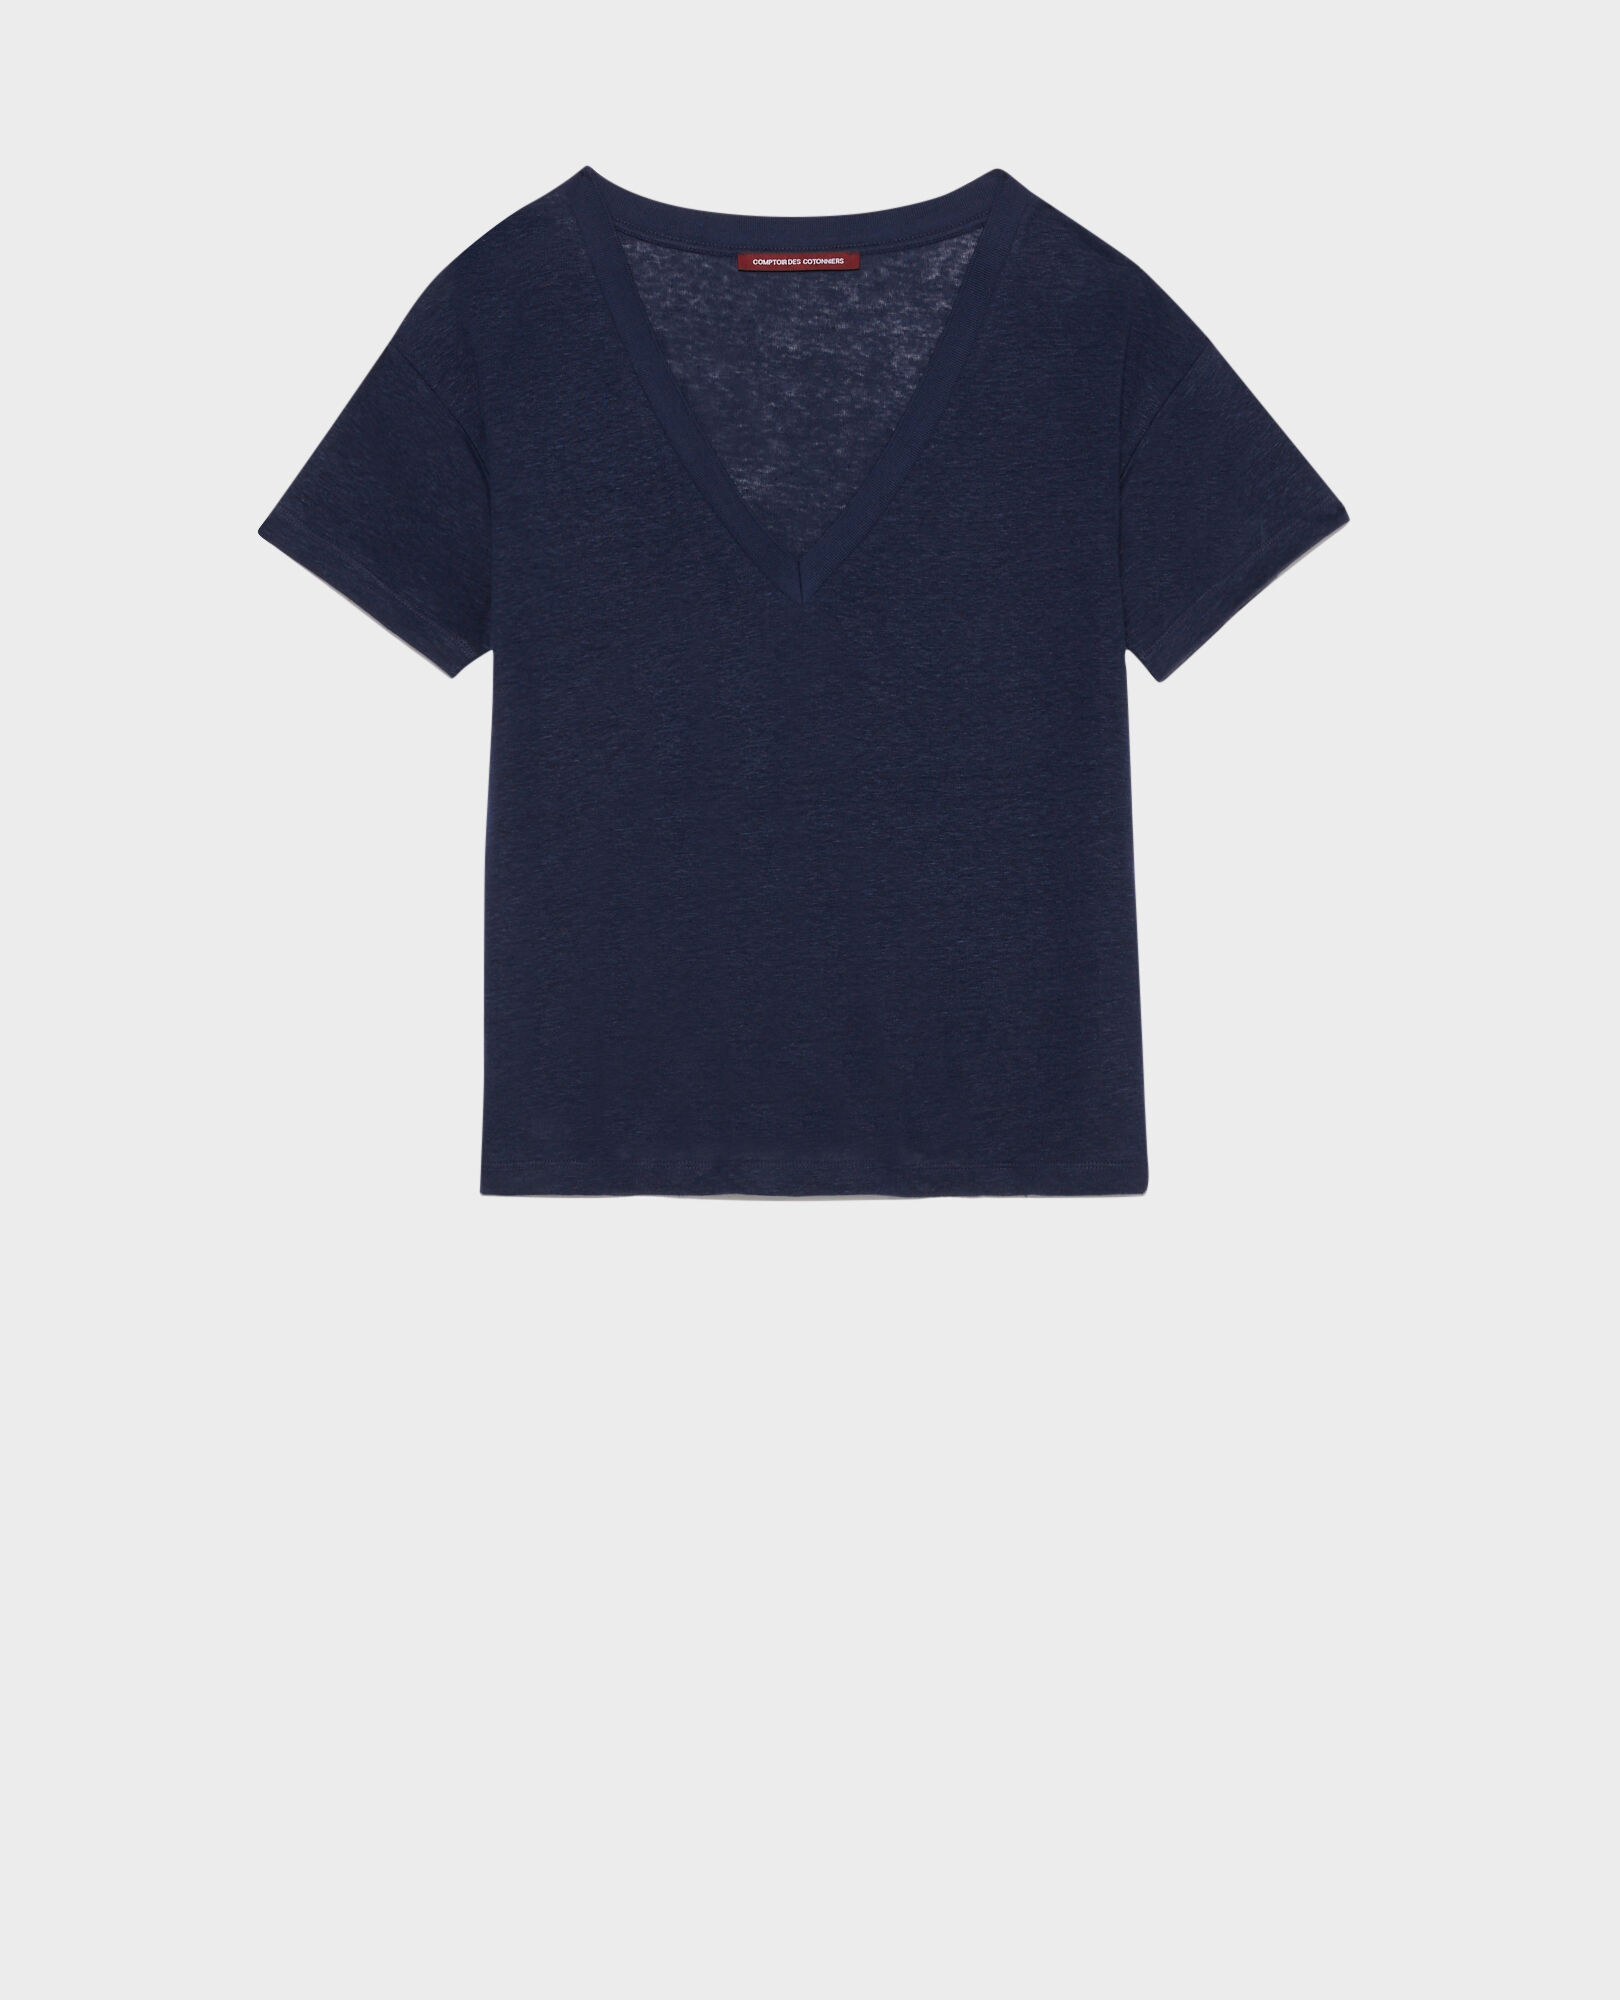 SARAH - Camiseta de lino con cuello de pico Maritime blue Locmelar